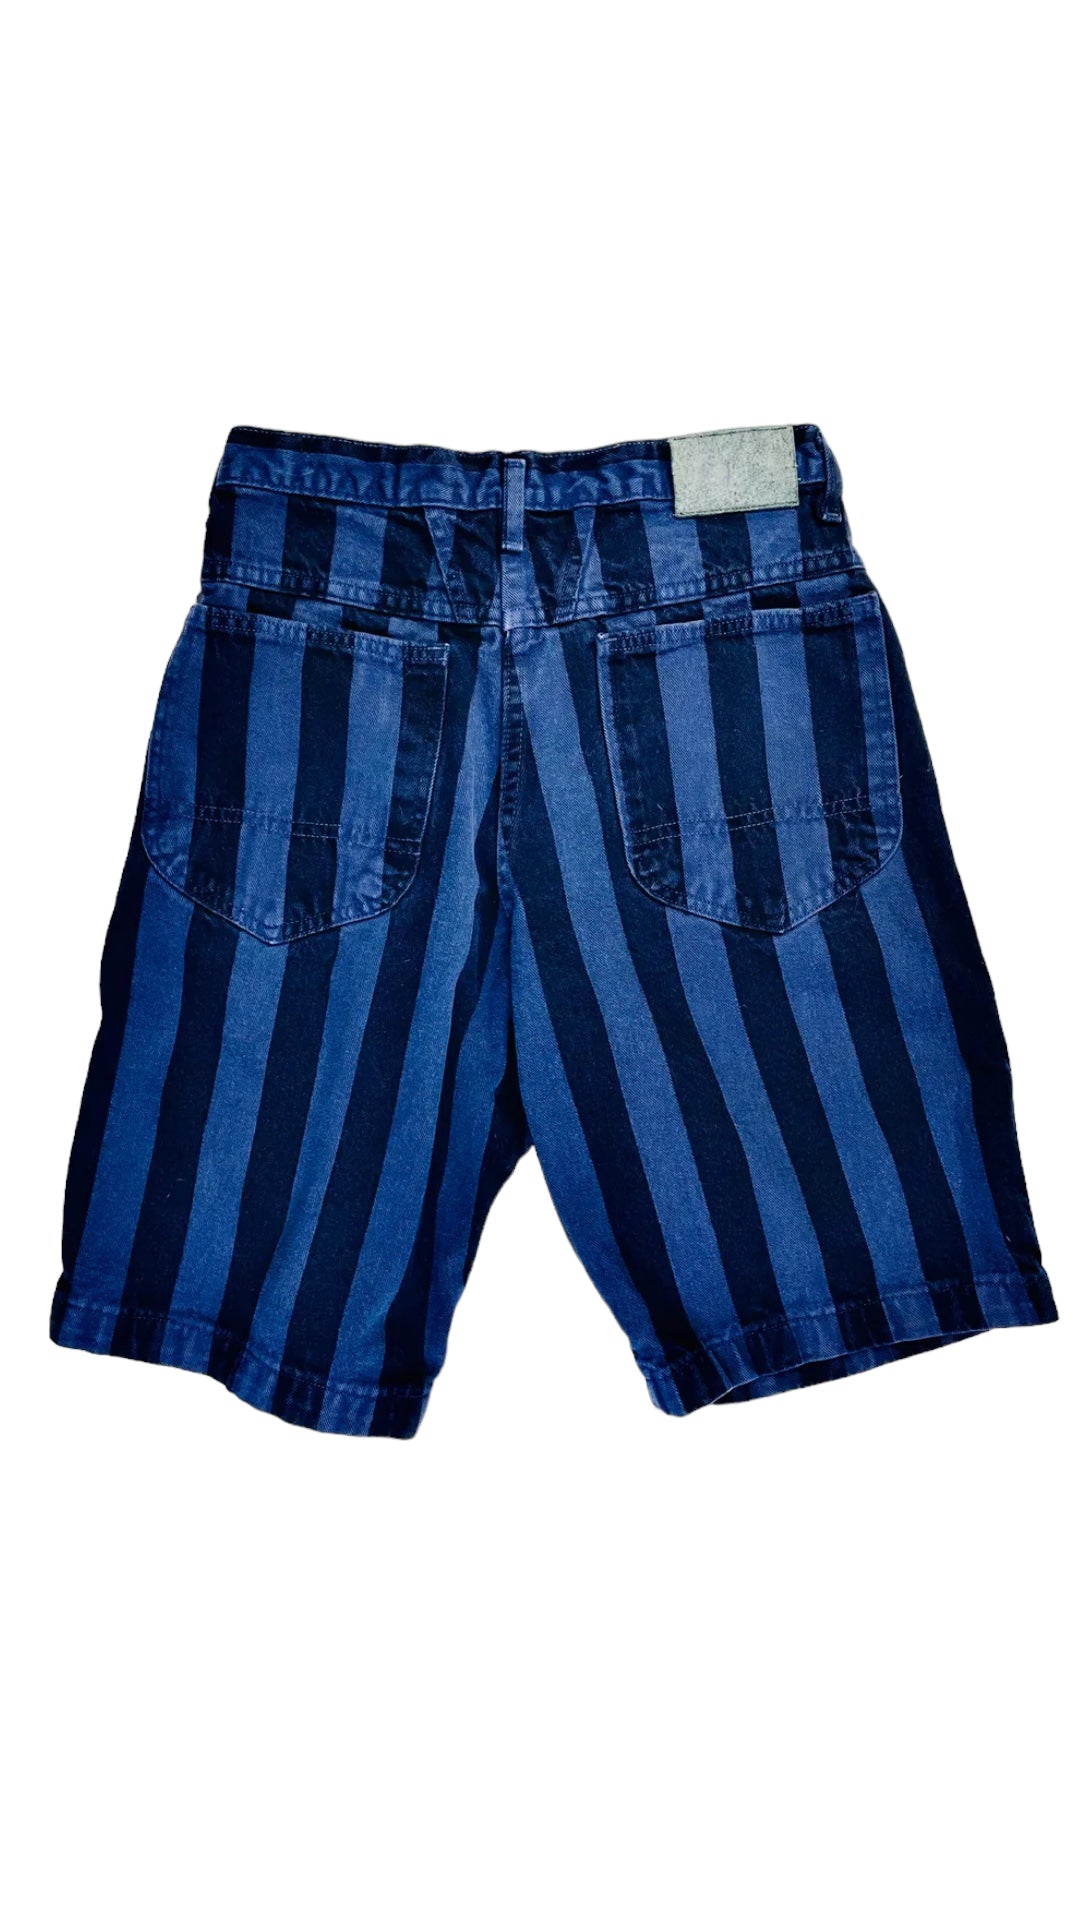 Vintage 90s GIRBAUD navy blue & purple striped denim shorts - Size 29